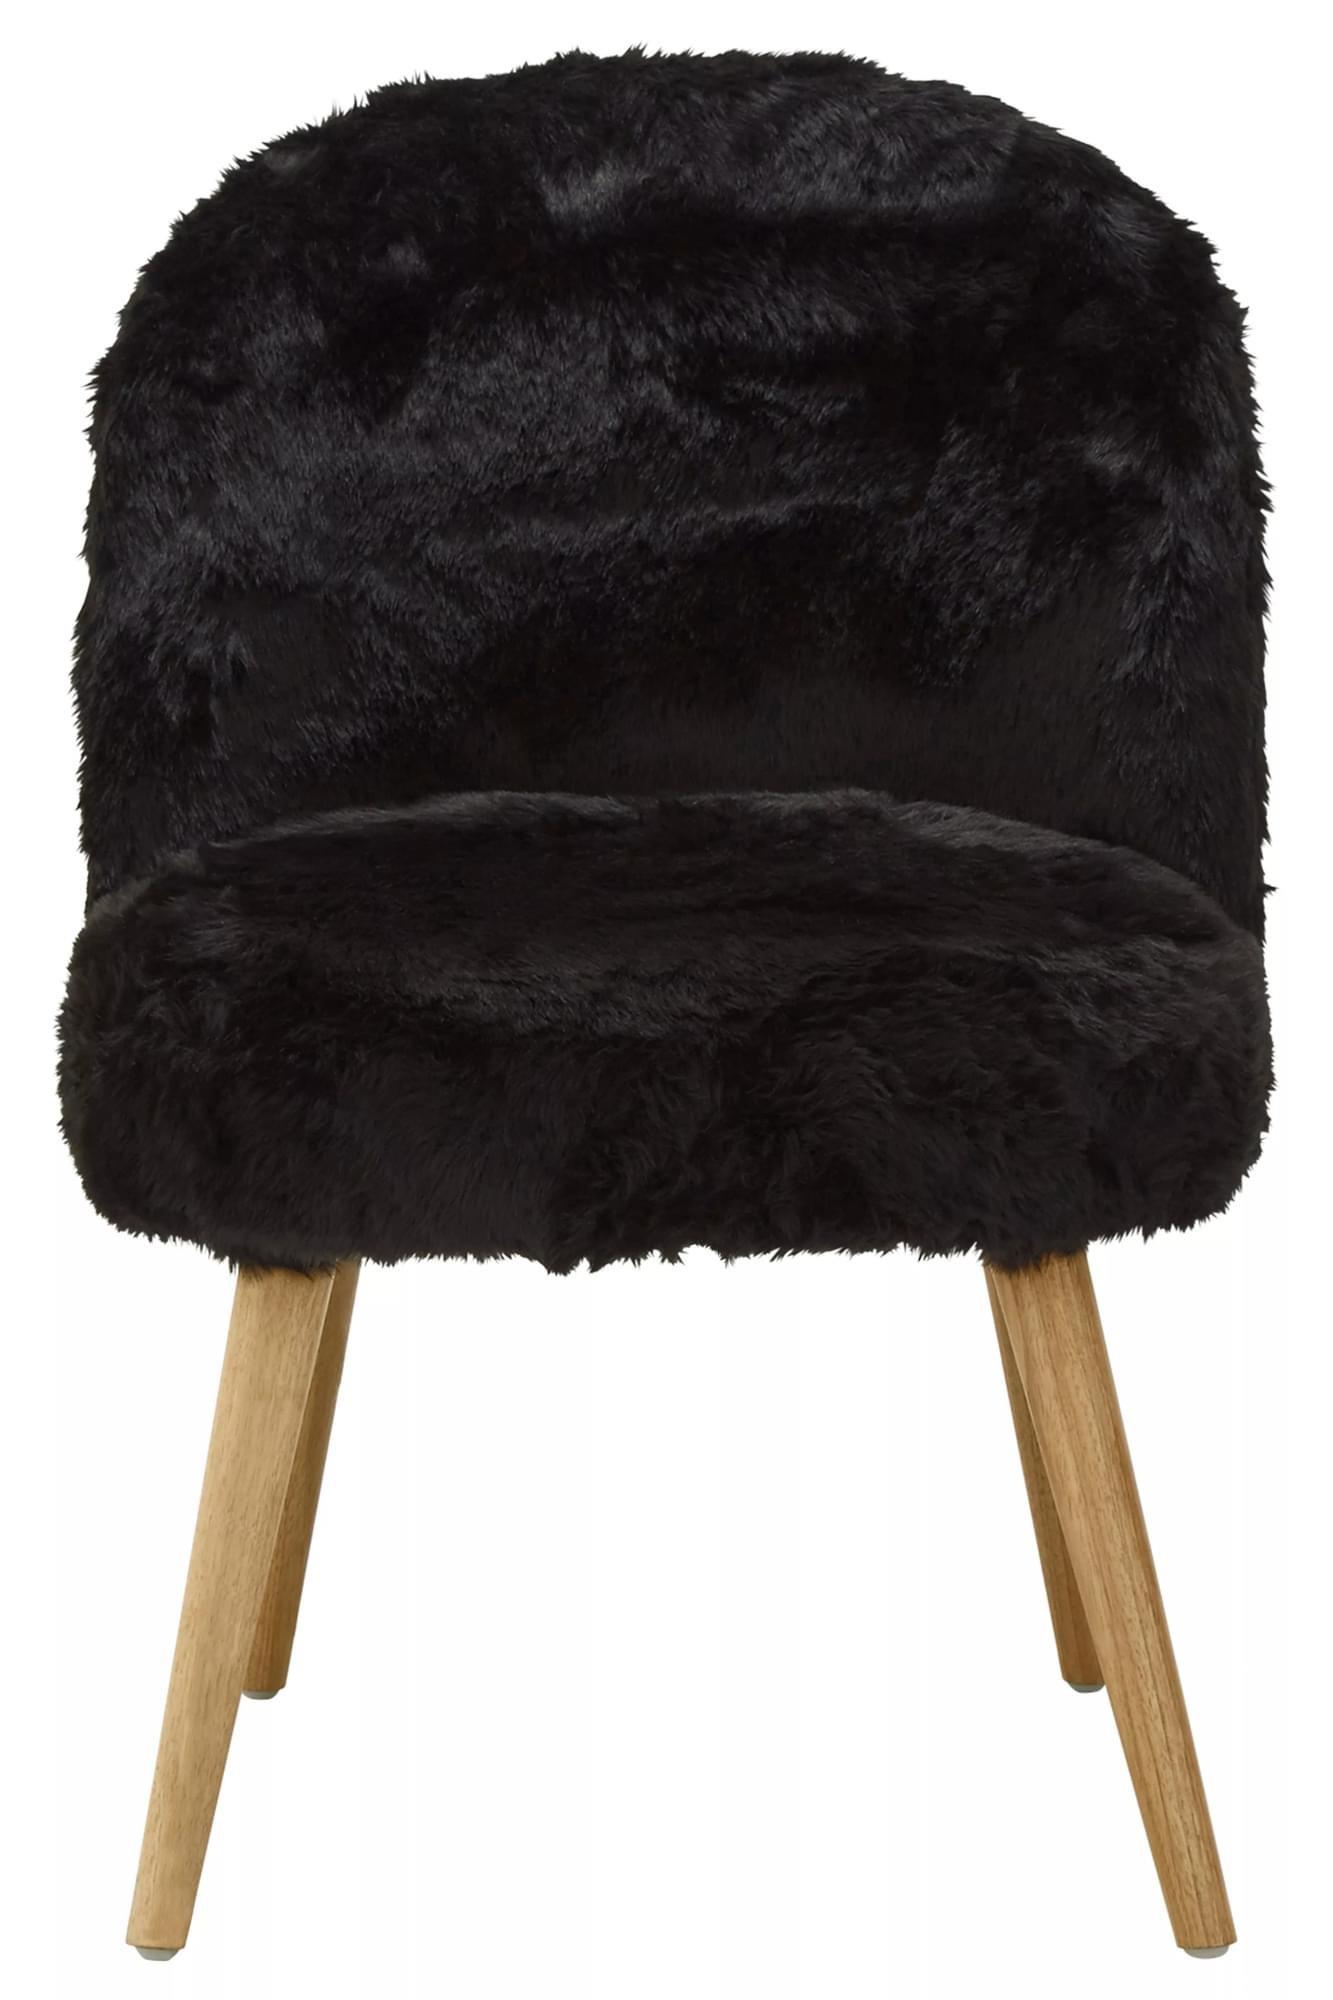 Interiors by Premier Cabaret Black Fur Effect Chair